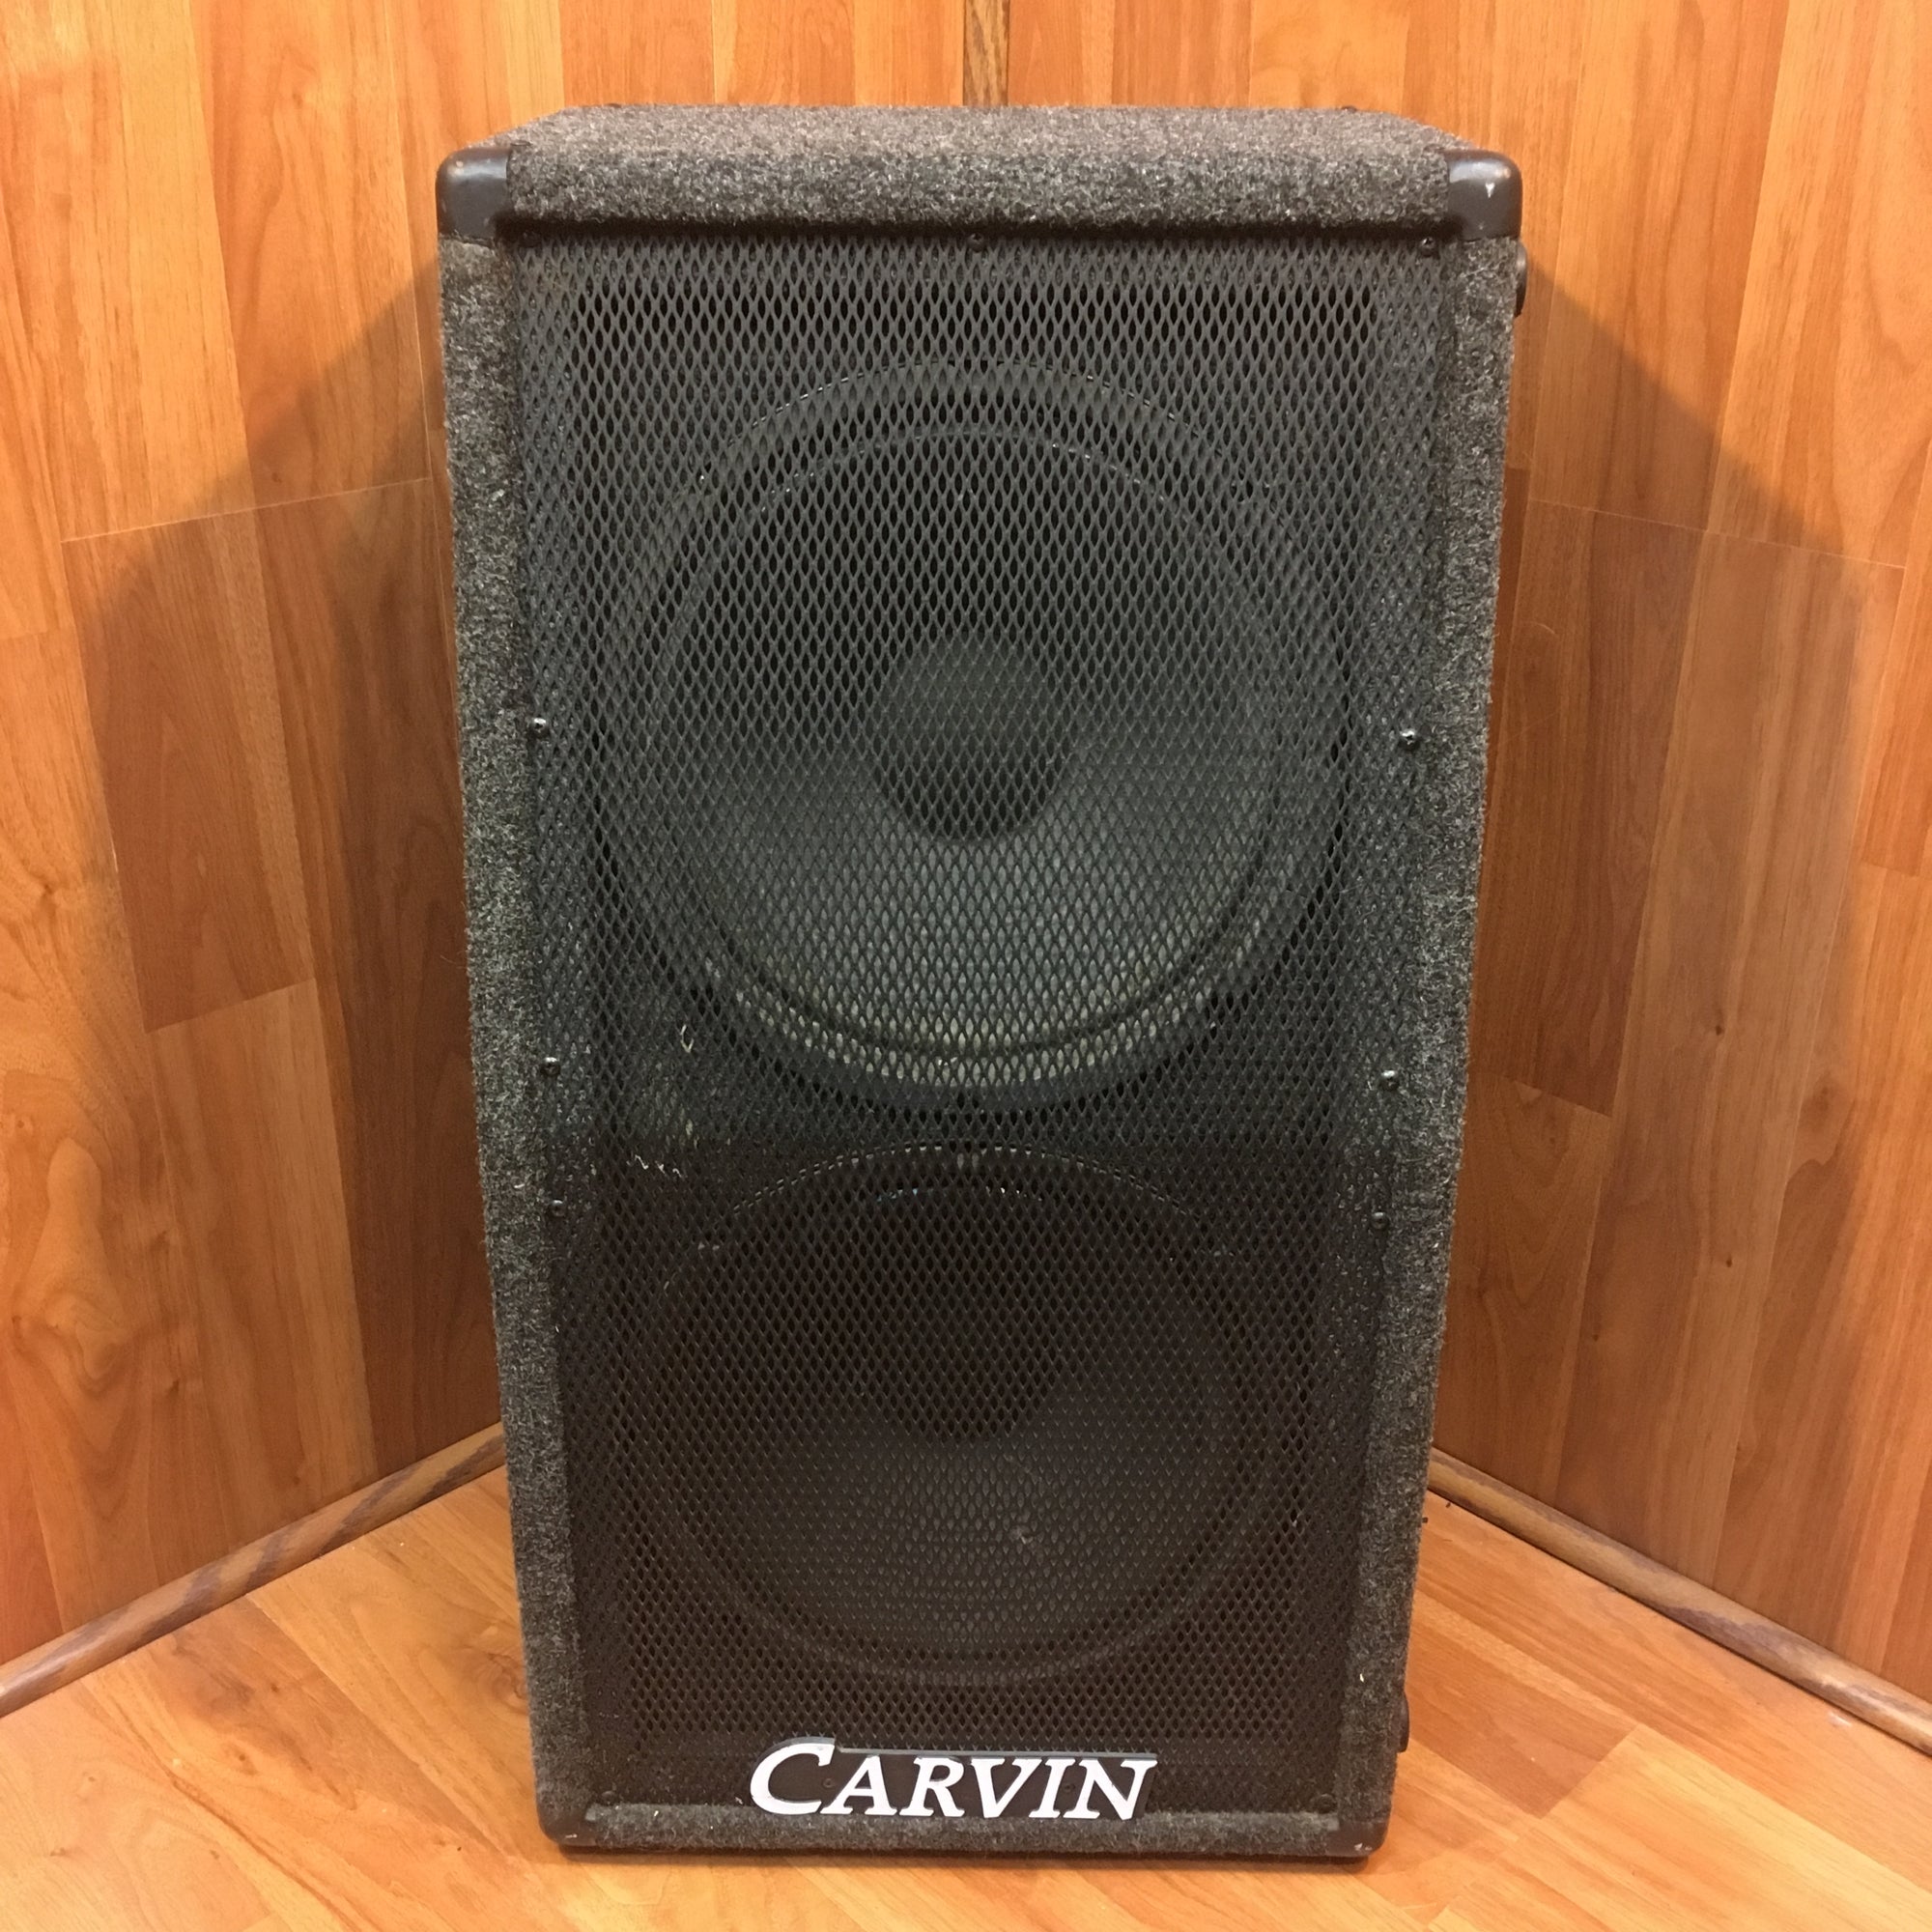 Carvin 2x12 Vertical Cab Celestion Loaded Evolution Music